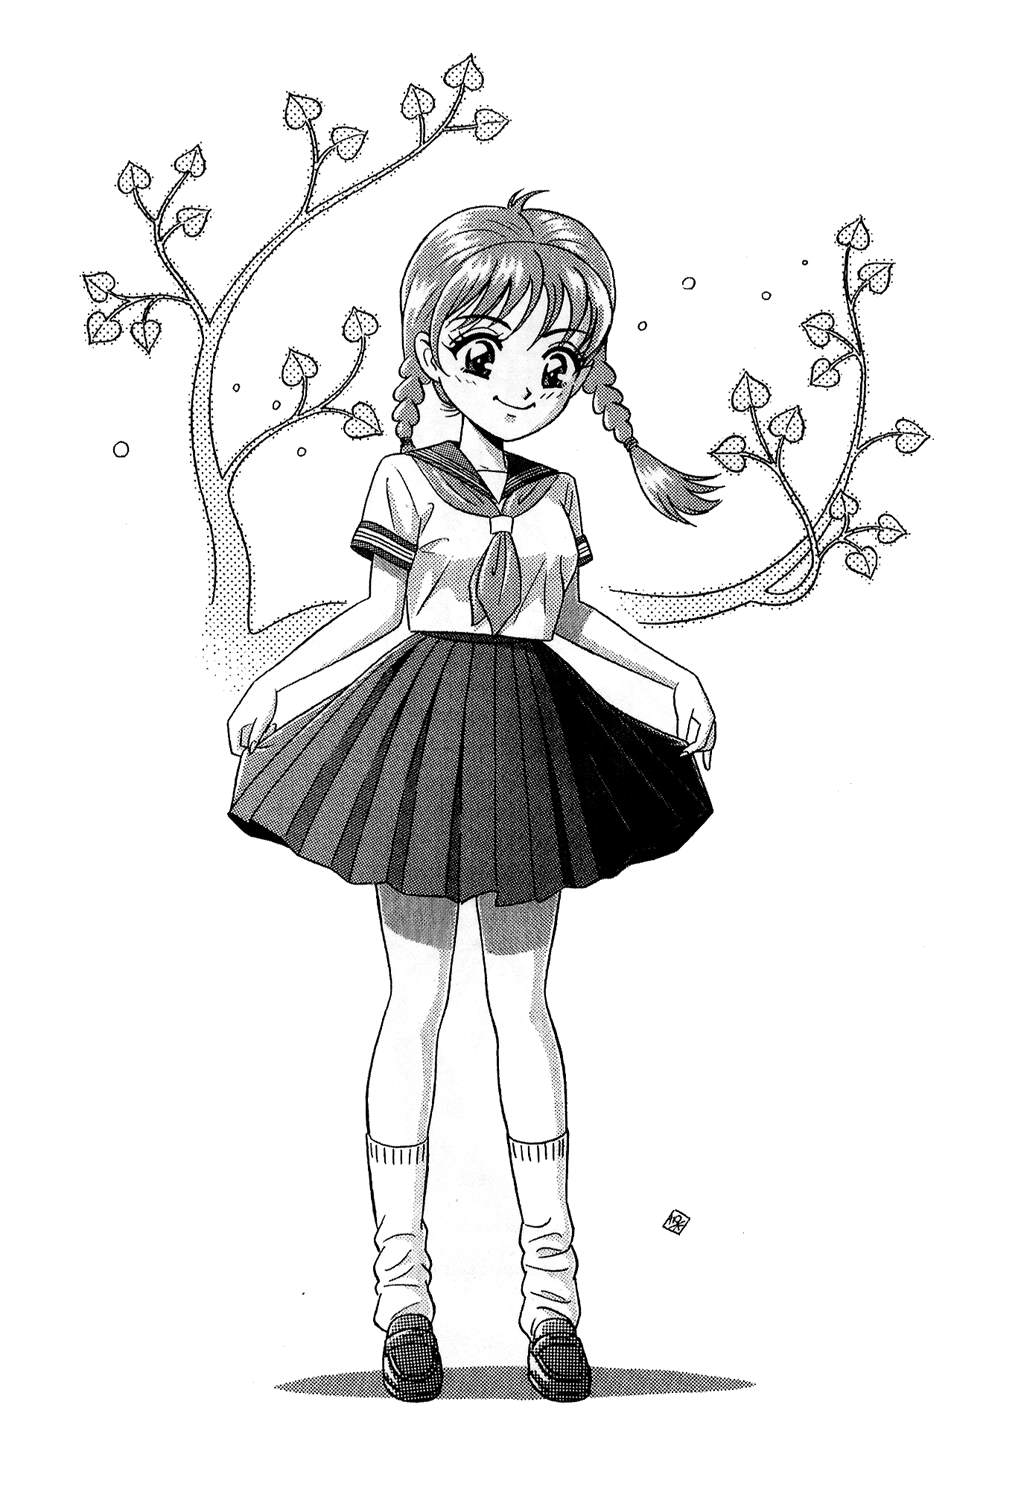 Le dessin du Manga 04 - Personnages feminin, Attitudes, Expressions numero d'image 111